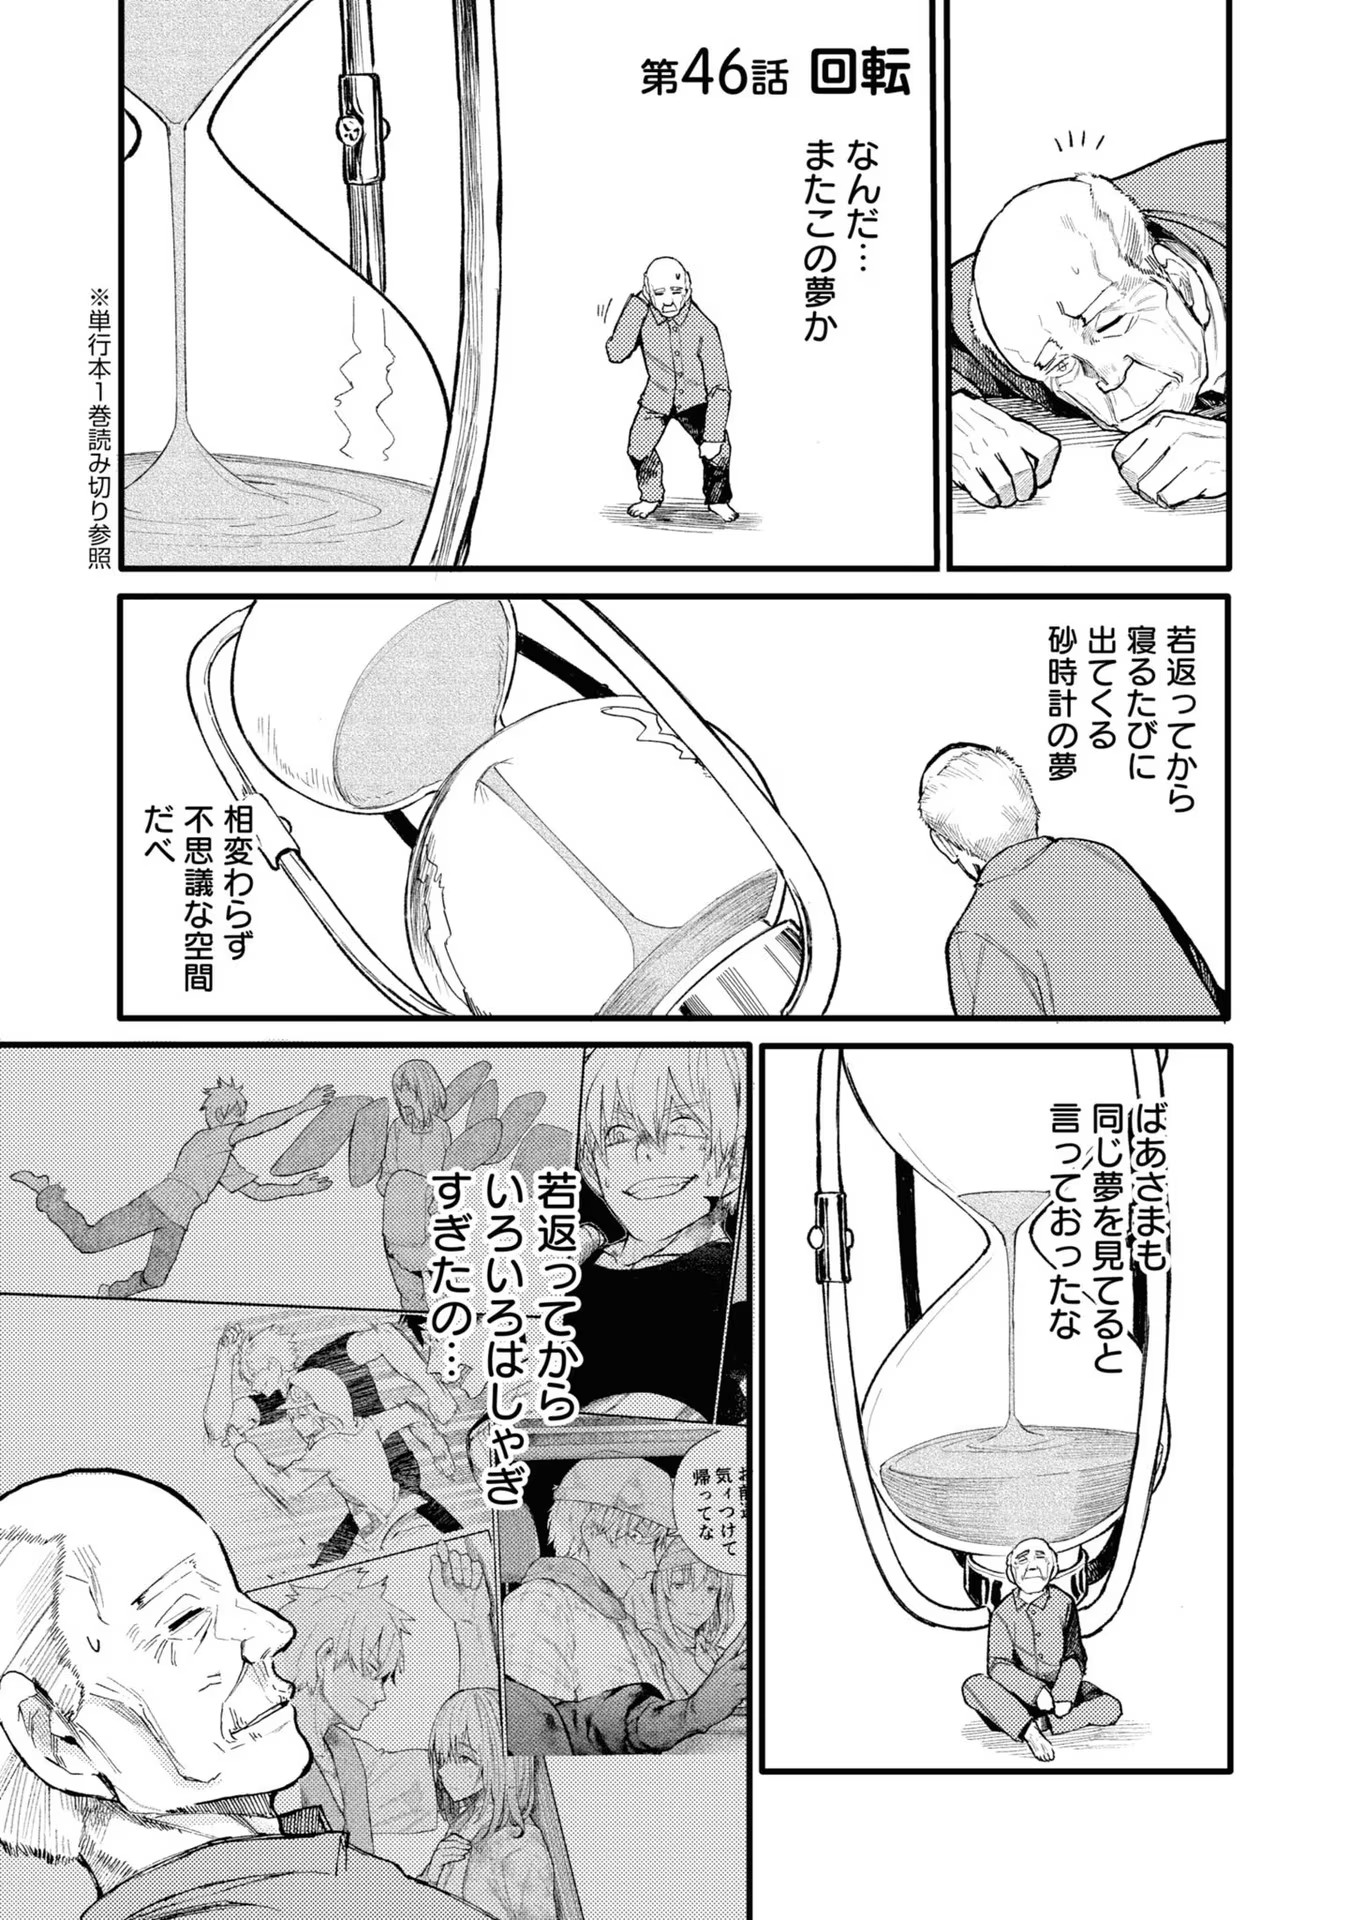 Ojii-san to Obaa-san ga Wakigaetta Hanashi - Chapter 46 - Page 1